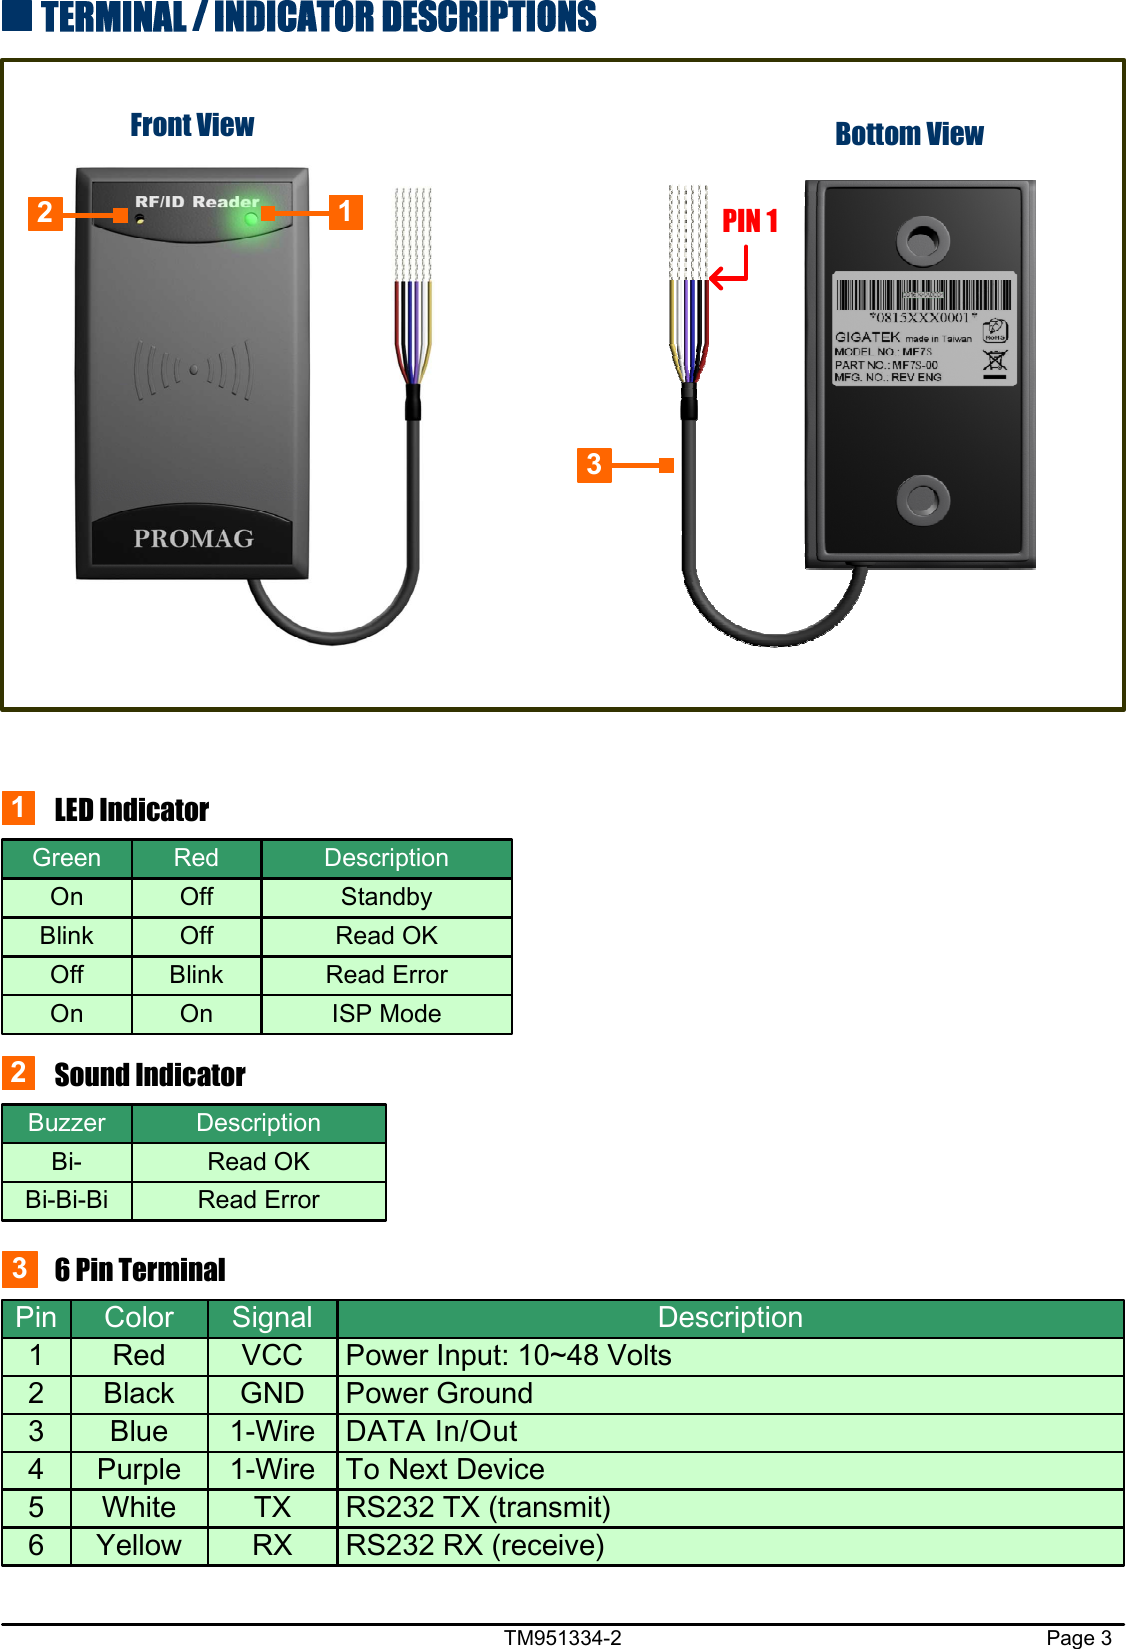 LED Indicator1OffOffBlinkRedOnBlinkOffGreenStandbyRead OKRead ErrorDescription12345Pin6 Pin Terminal36Power Input: 10~48 VoltsPower GroundDATA In/OutTo Next DeviceDescriptionRS232 TX (transmit)PurpleBlueBlackRedColorYellowWhite1-Wire1-WireGNDVCCSignalRXTXRS232 RX (receive)Sound Indicator2Bi-BuzzerRead OKDescriptionPage 313PIN 1TM951334-22OnOn ISP ModeFront View Bottom ViewBi-Bi-Bi Read Error